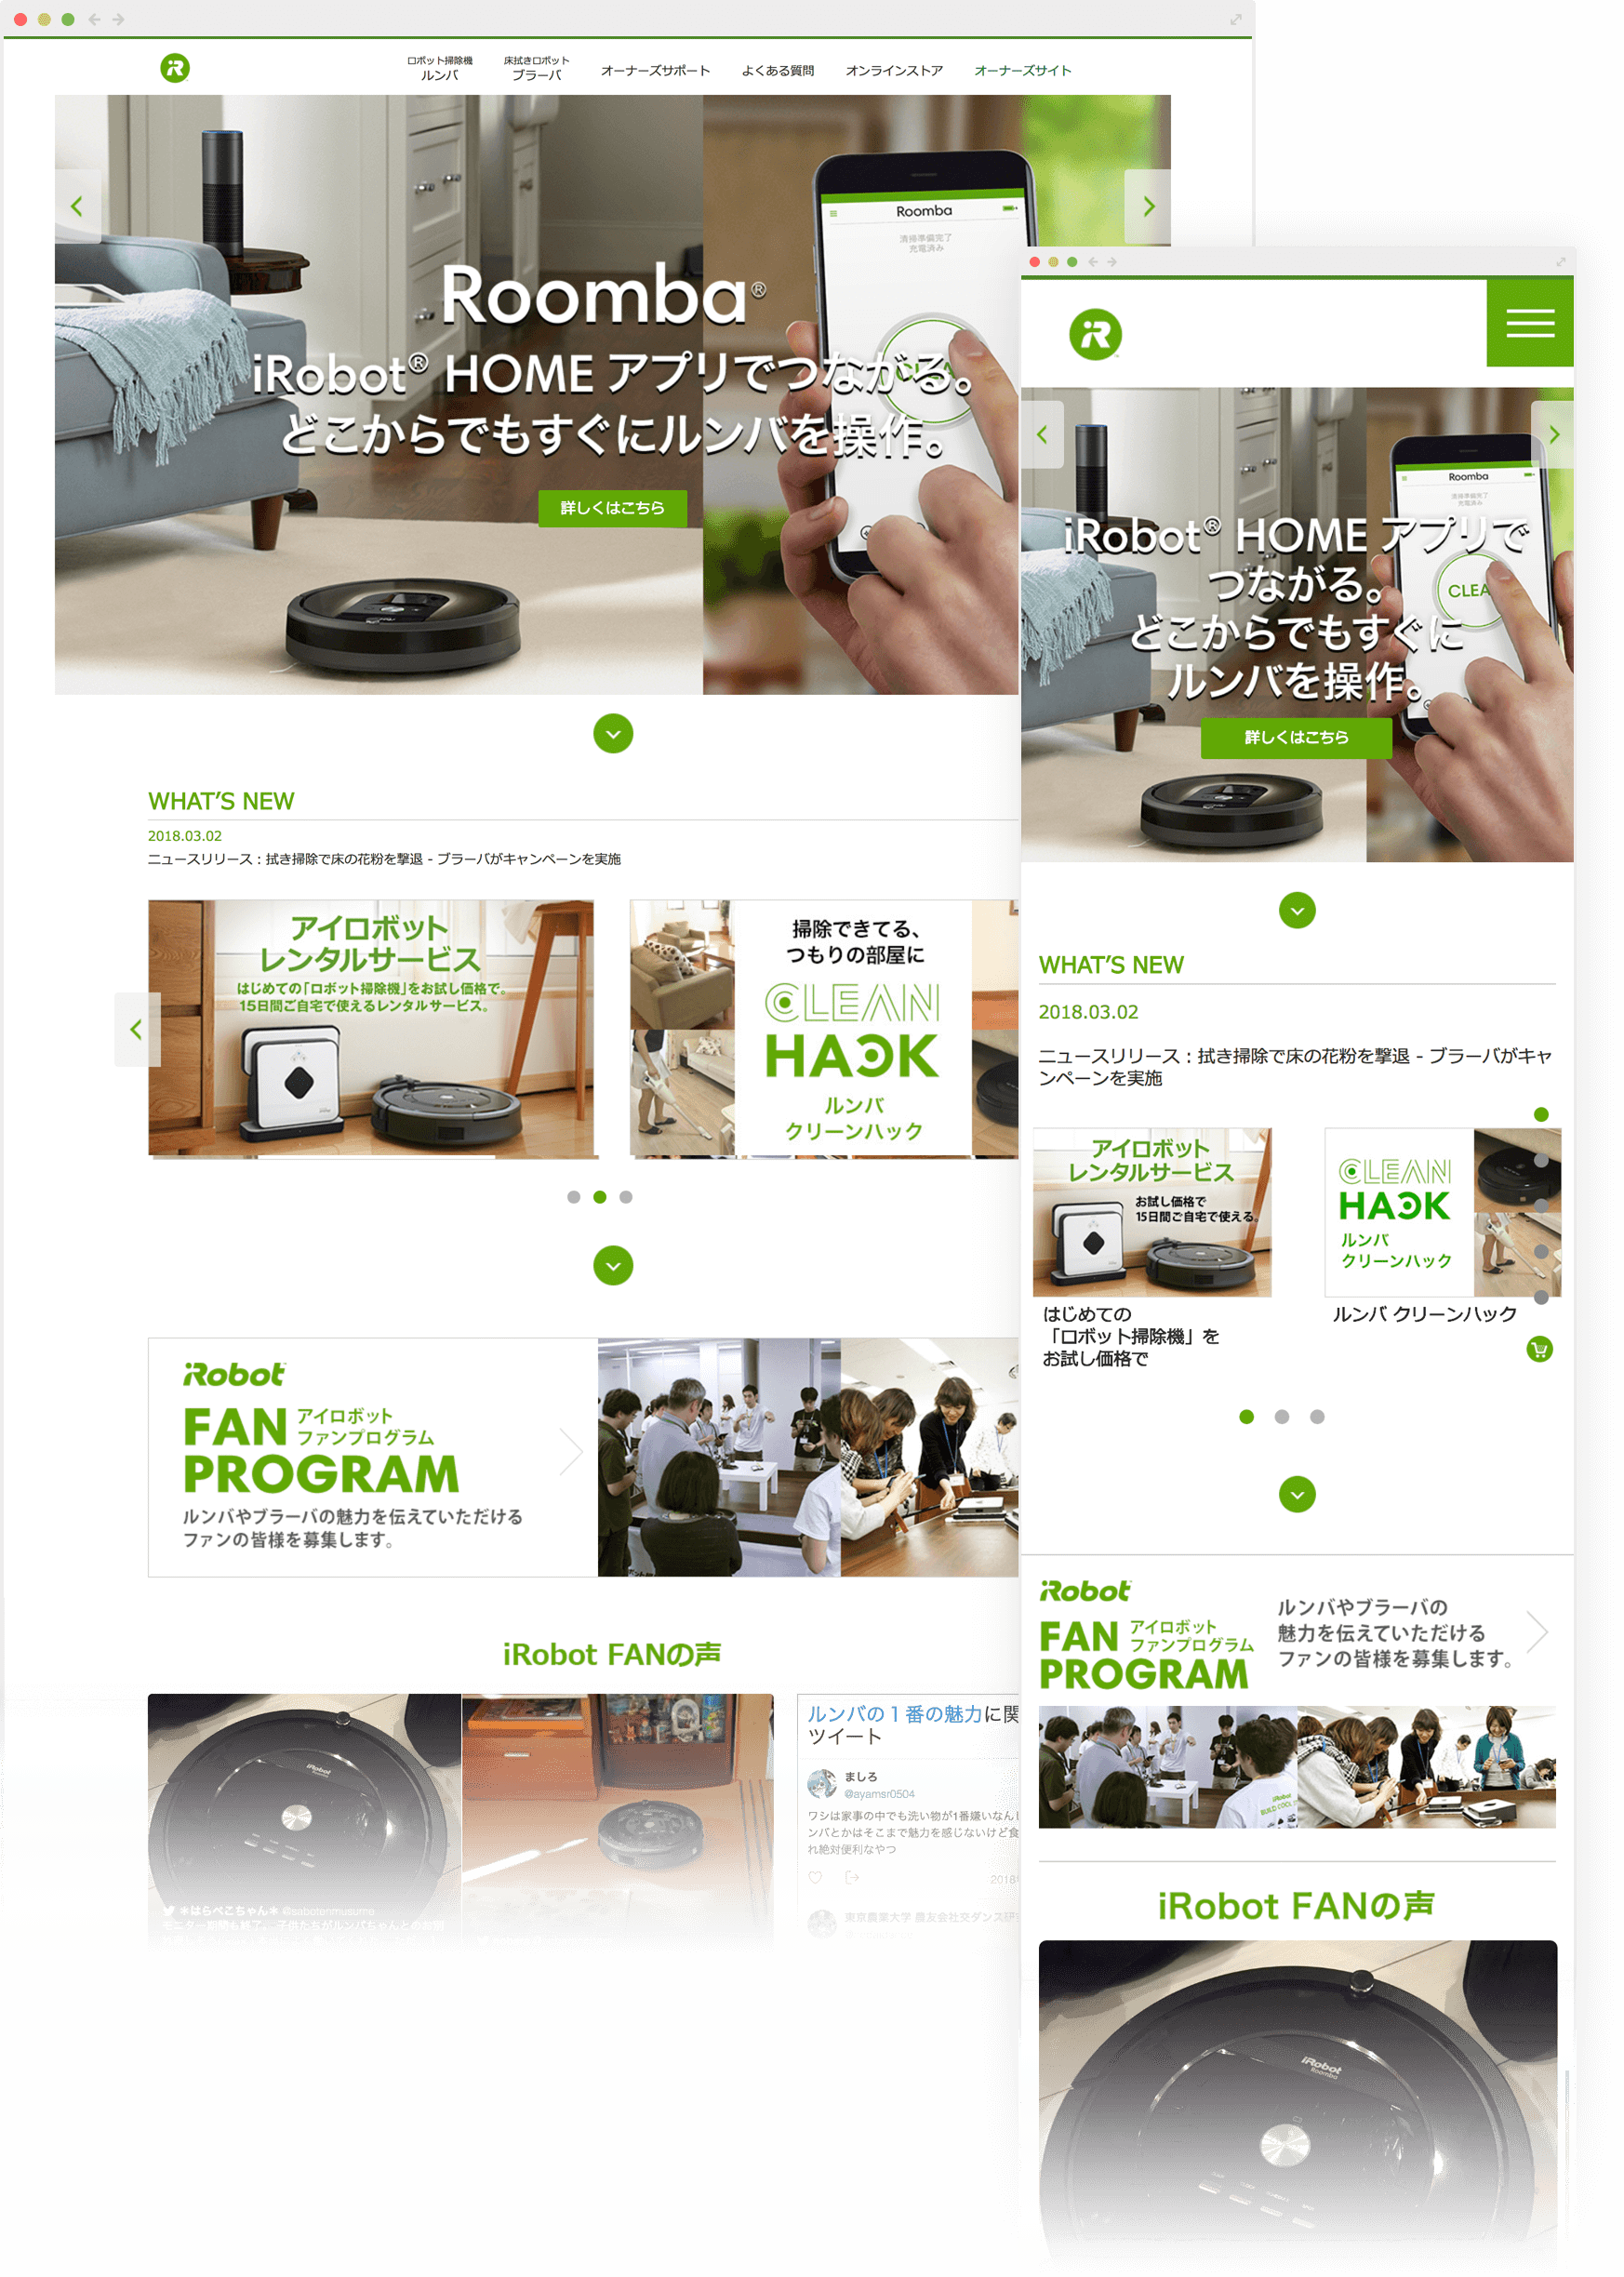 iRobot e-Commerce Store Homepage Responsive